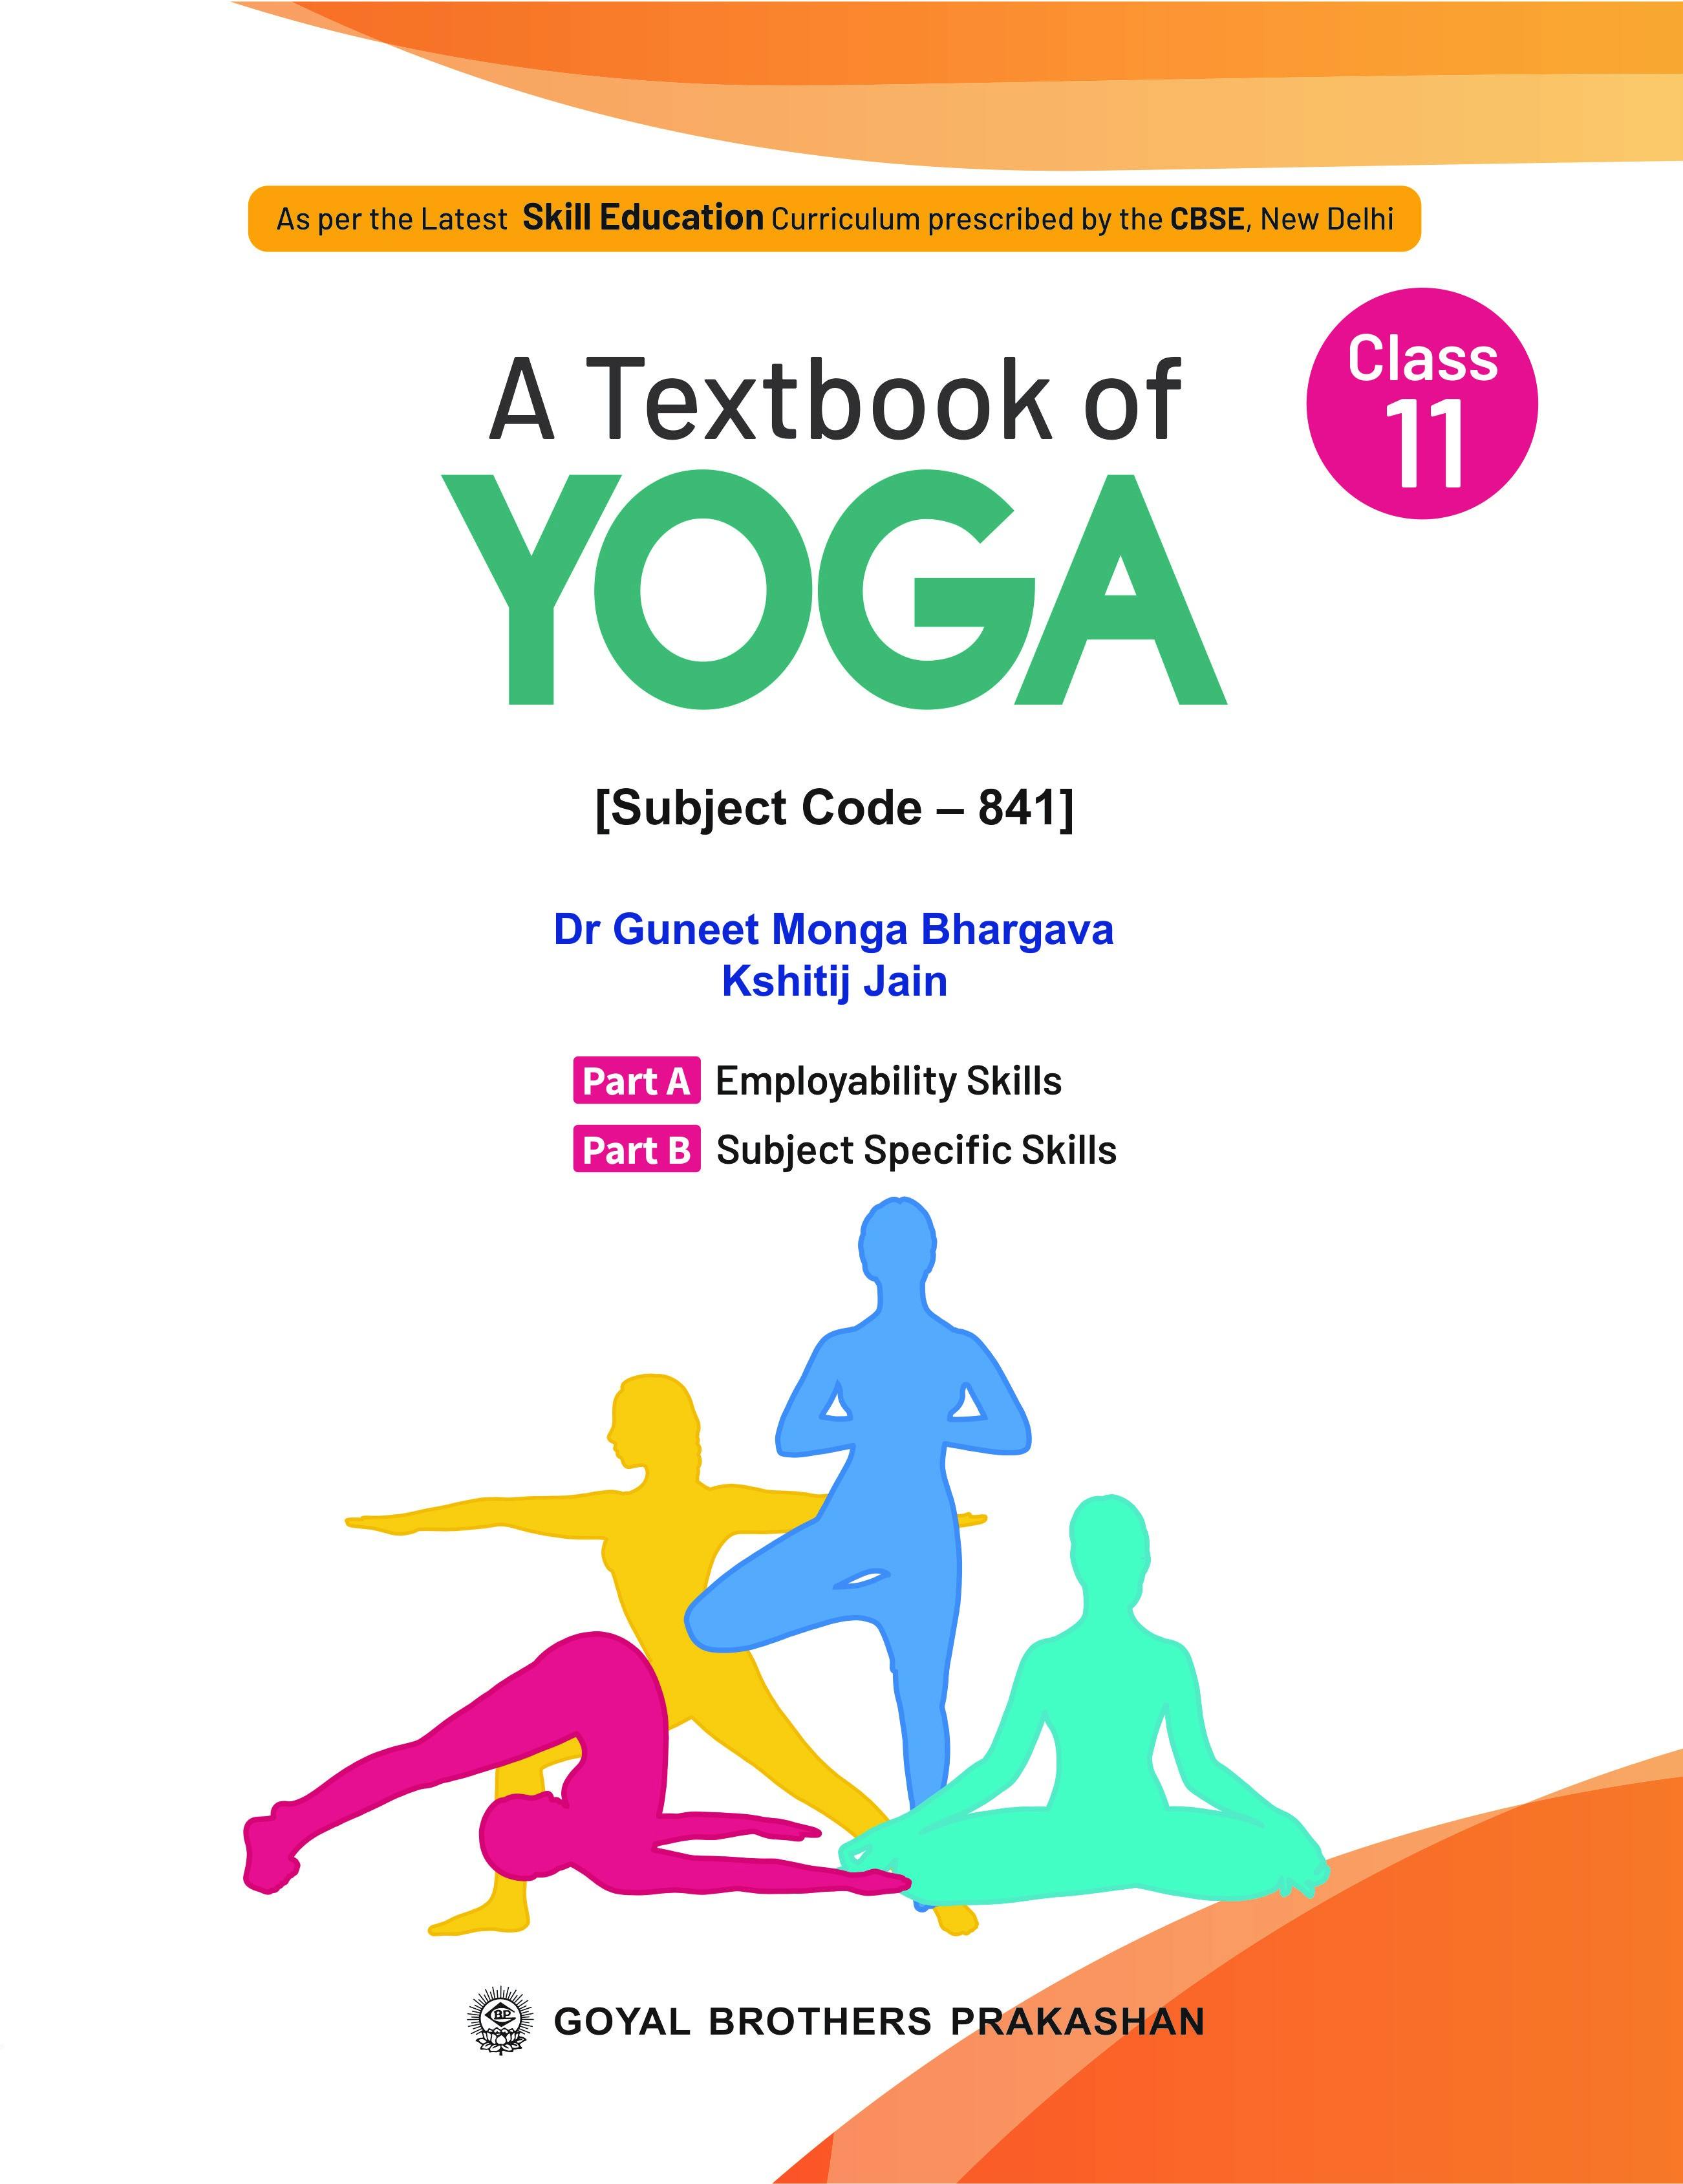 CBSE Class 11 Yoga Textbook by Dr. Guneet Monga Bhargava - Subject